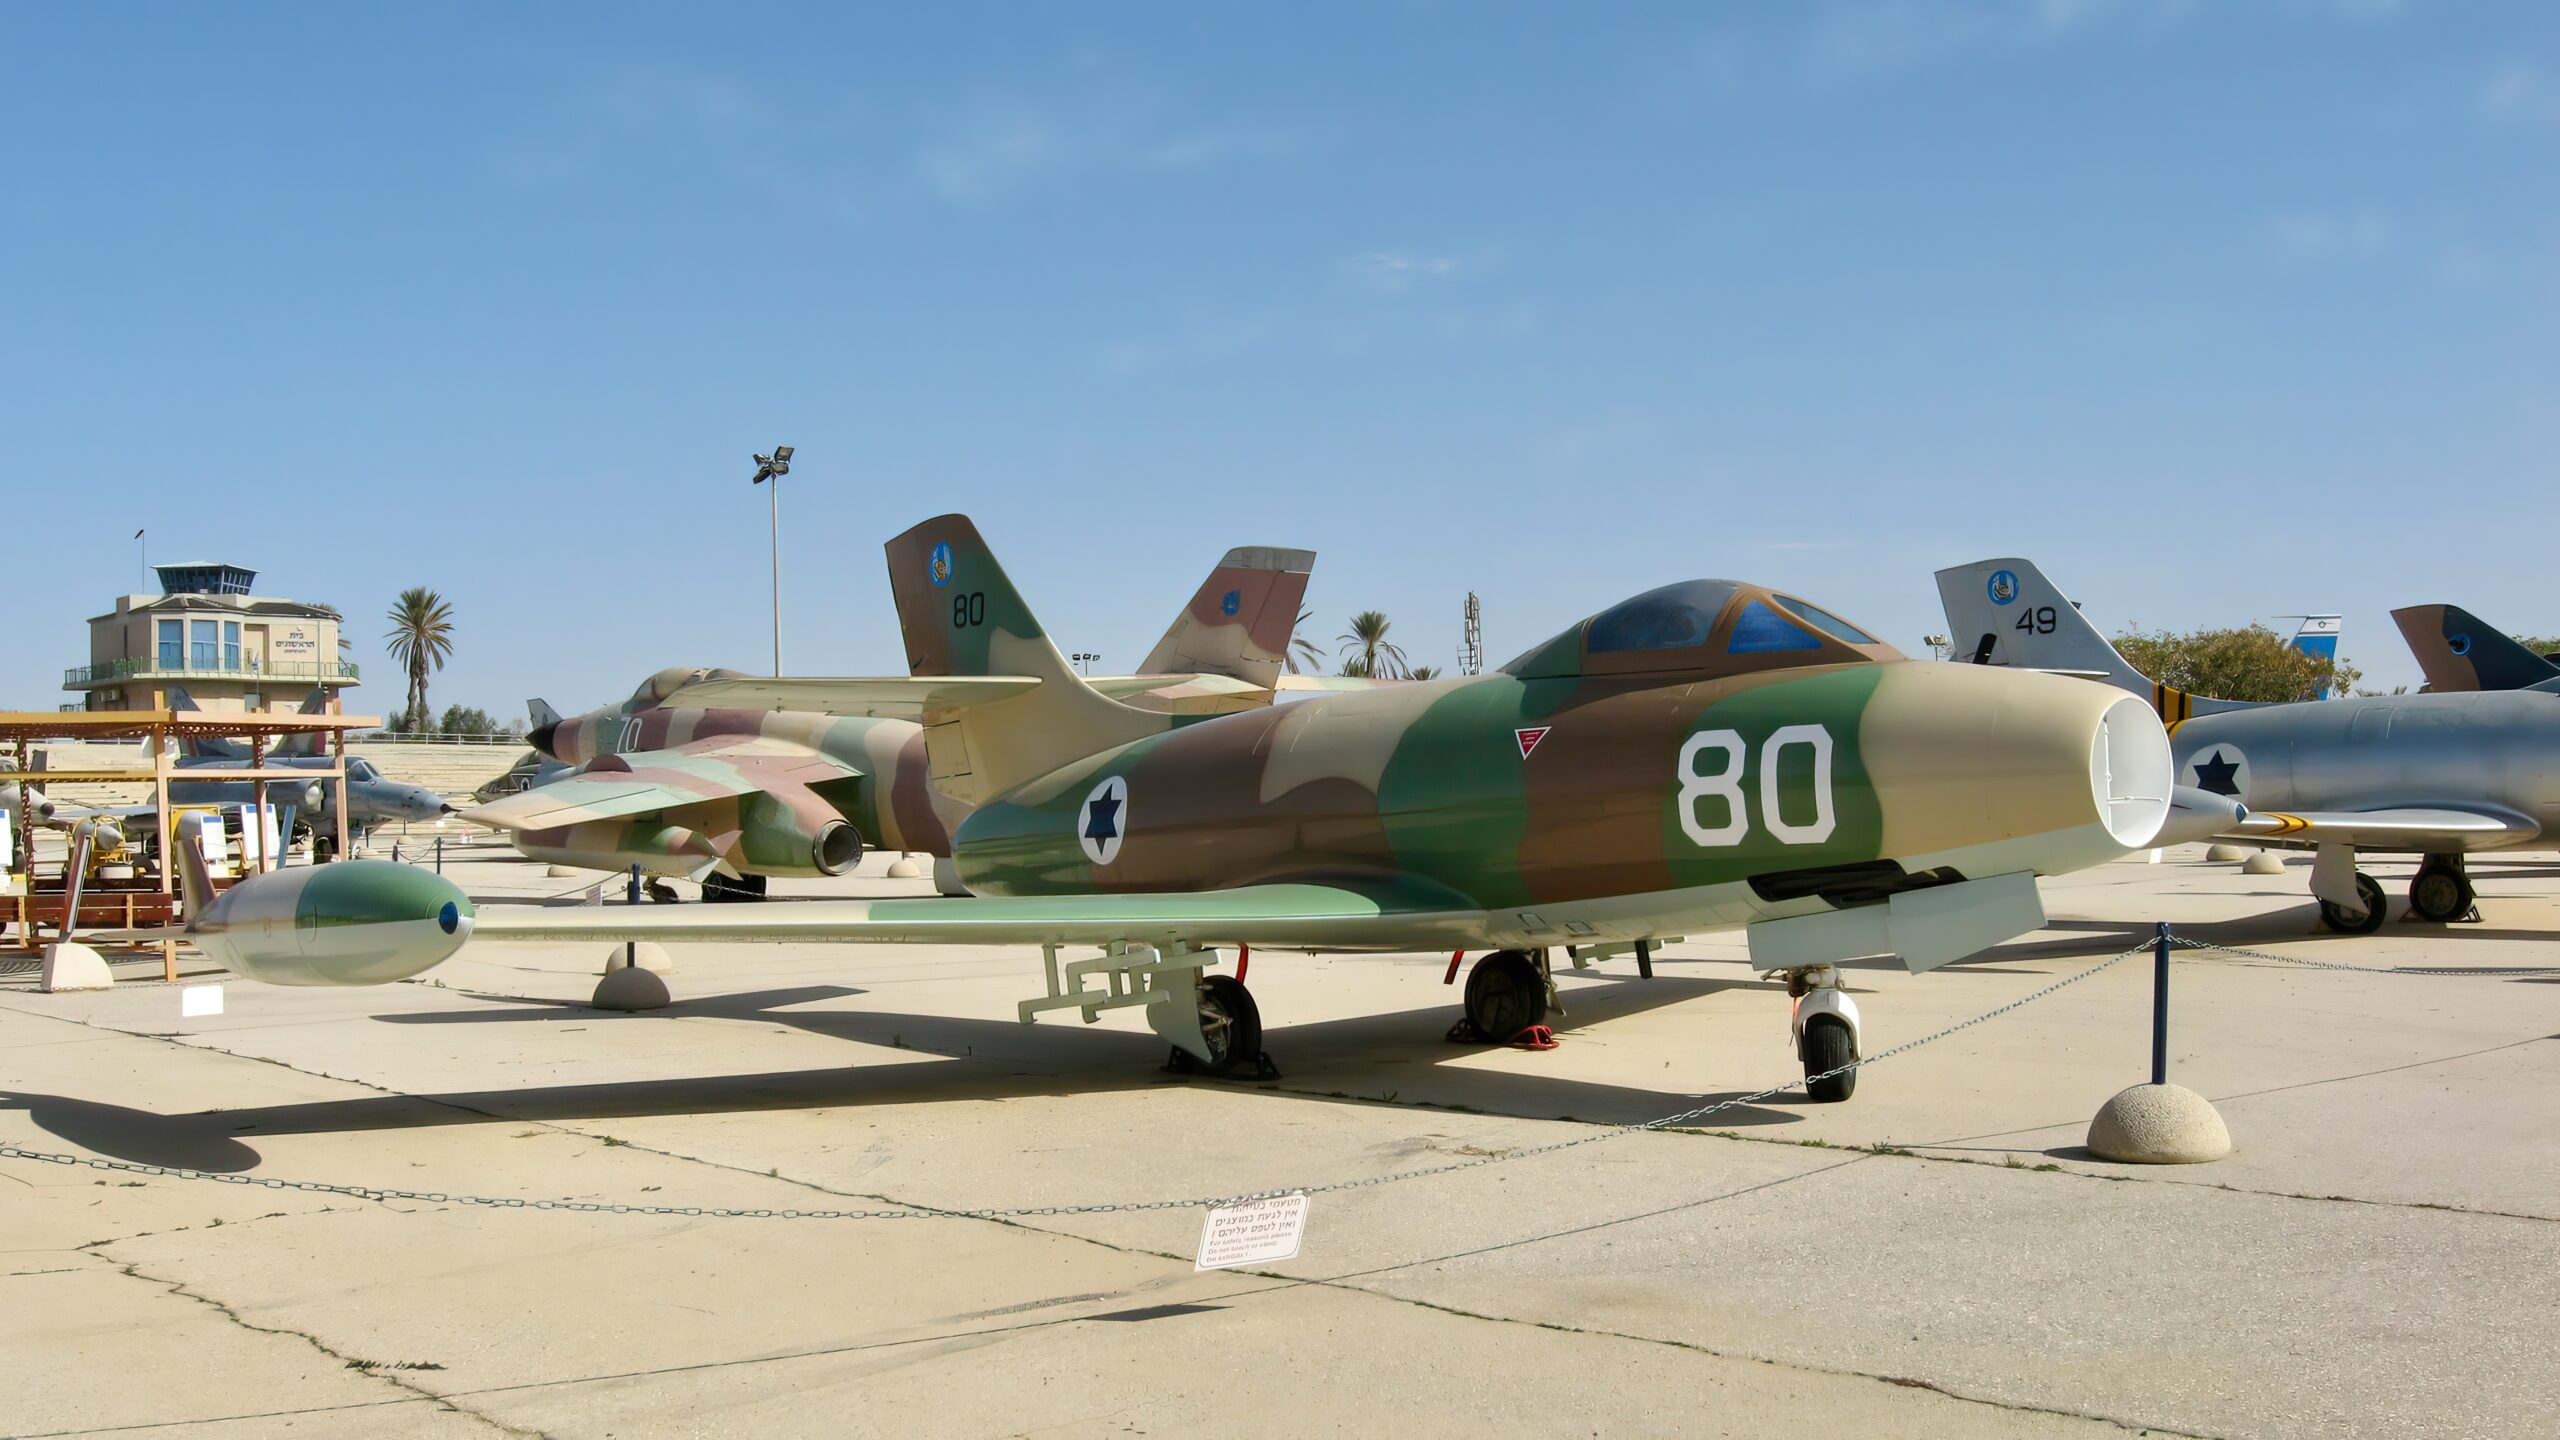 Dassault Ouragan at the Israeli Air Force Museum in Hatzerim